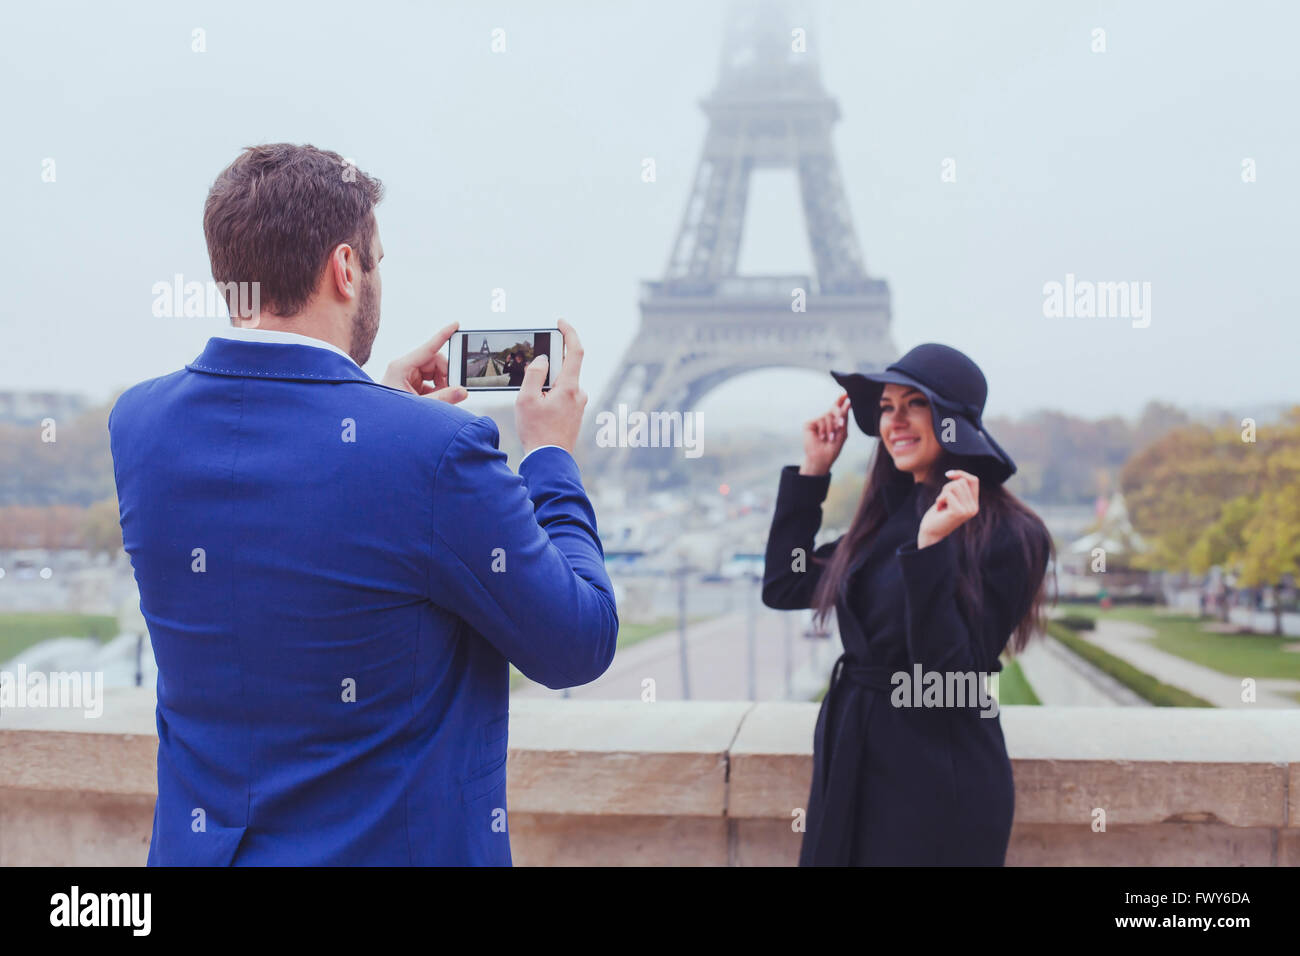 mobile Fotografie, Mann nehmen Foto Frau mit seinem Telefon, paar Touristen nahe dem Eiffelturm in Paris, Frankreich Stockfoto